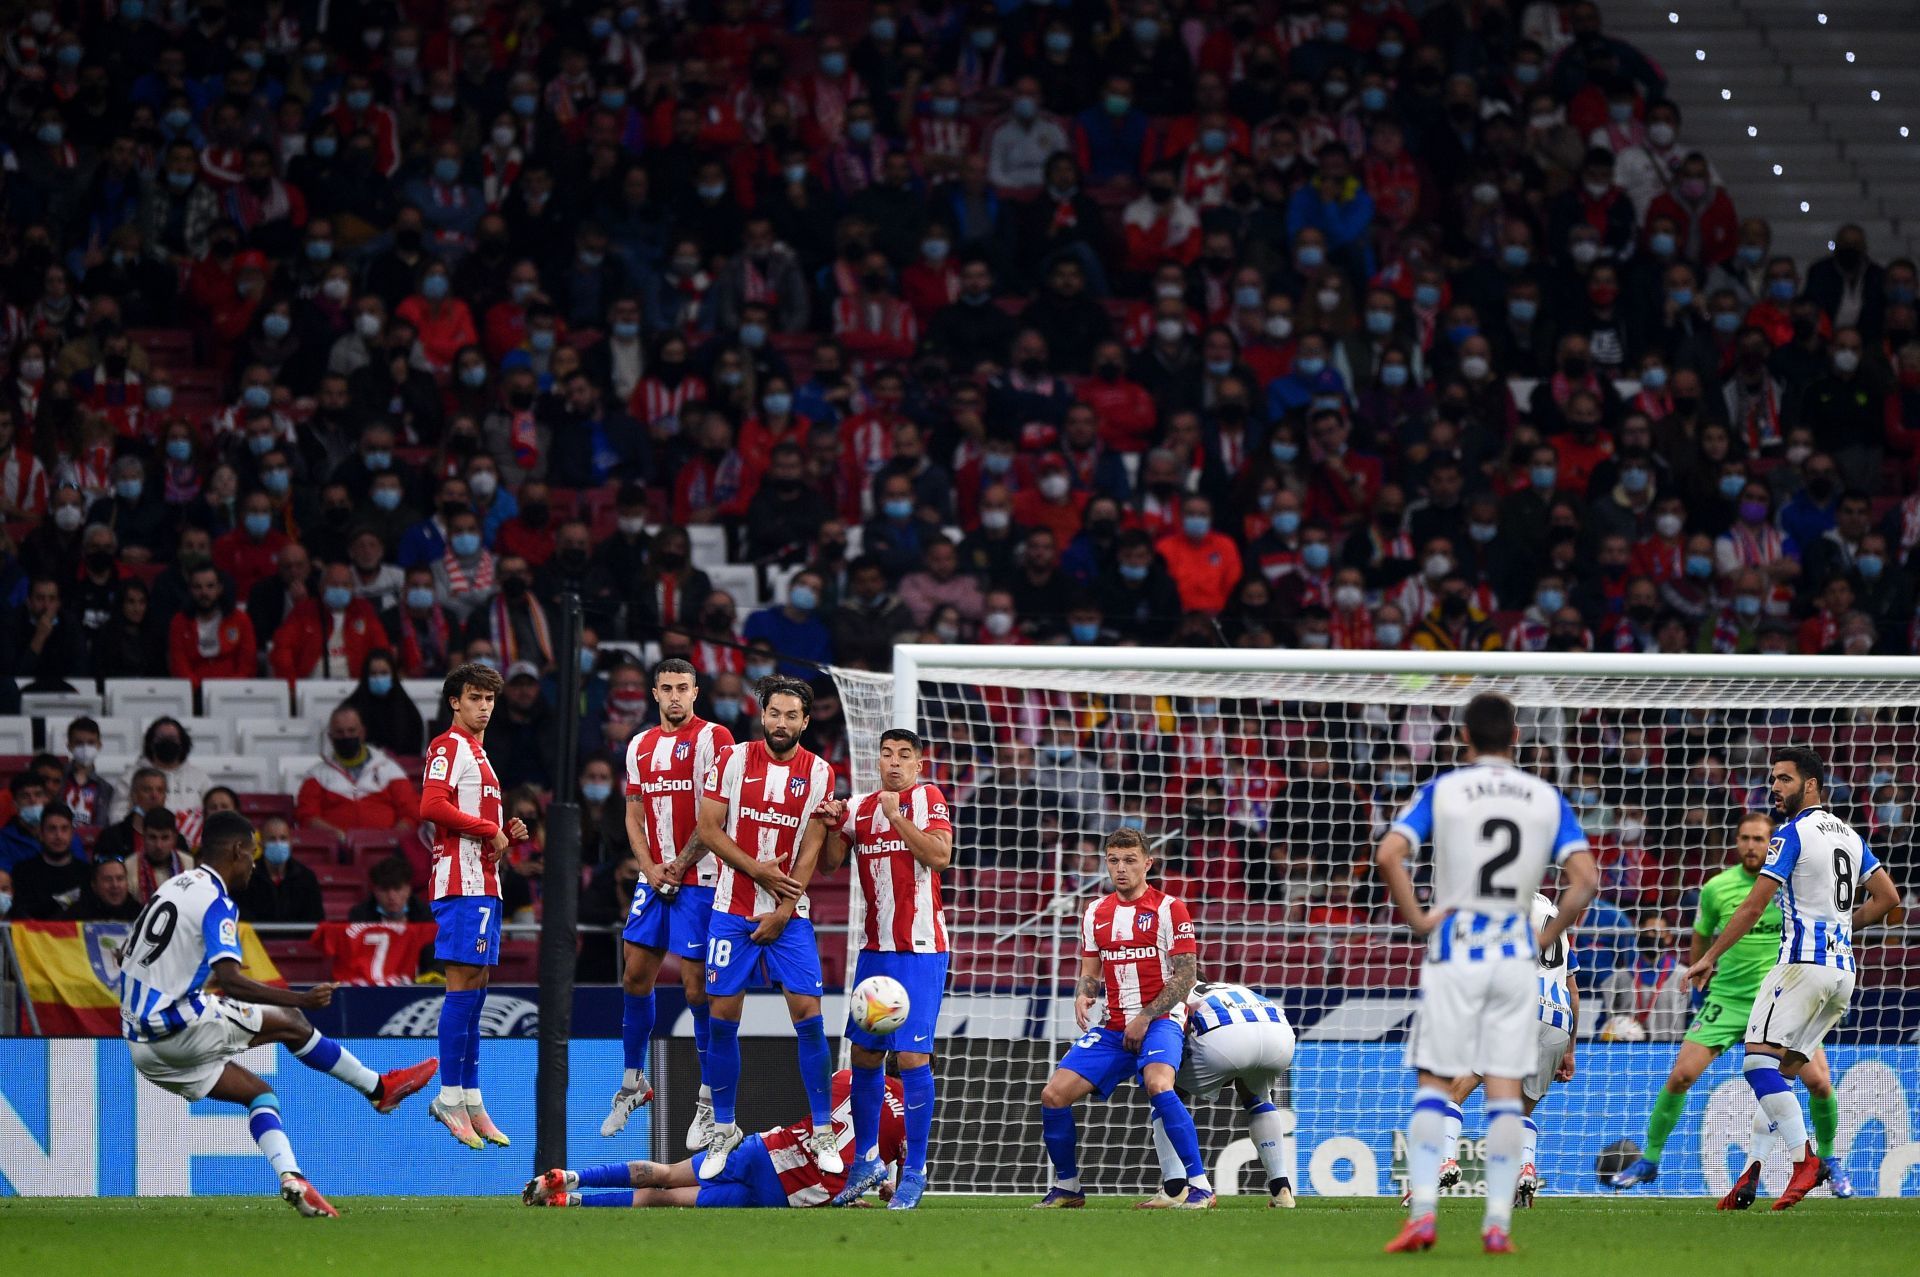 Atletico Madrid and Real Sociedad meet in a tough cup clash